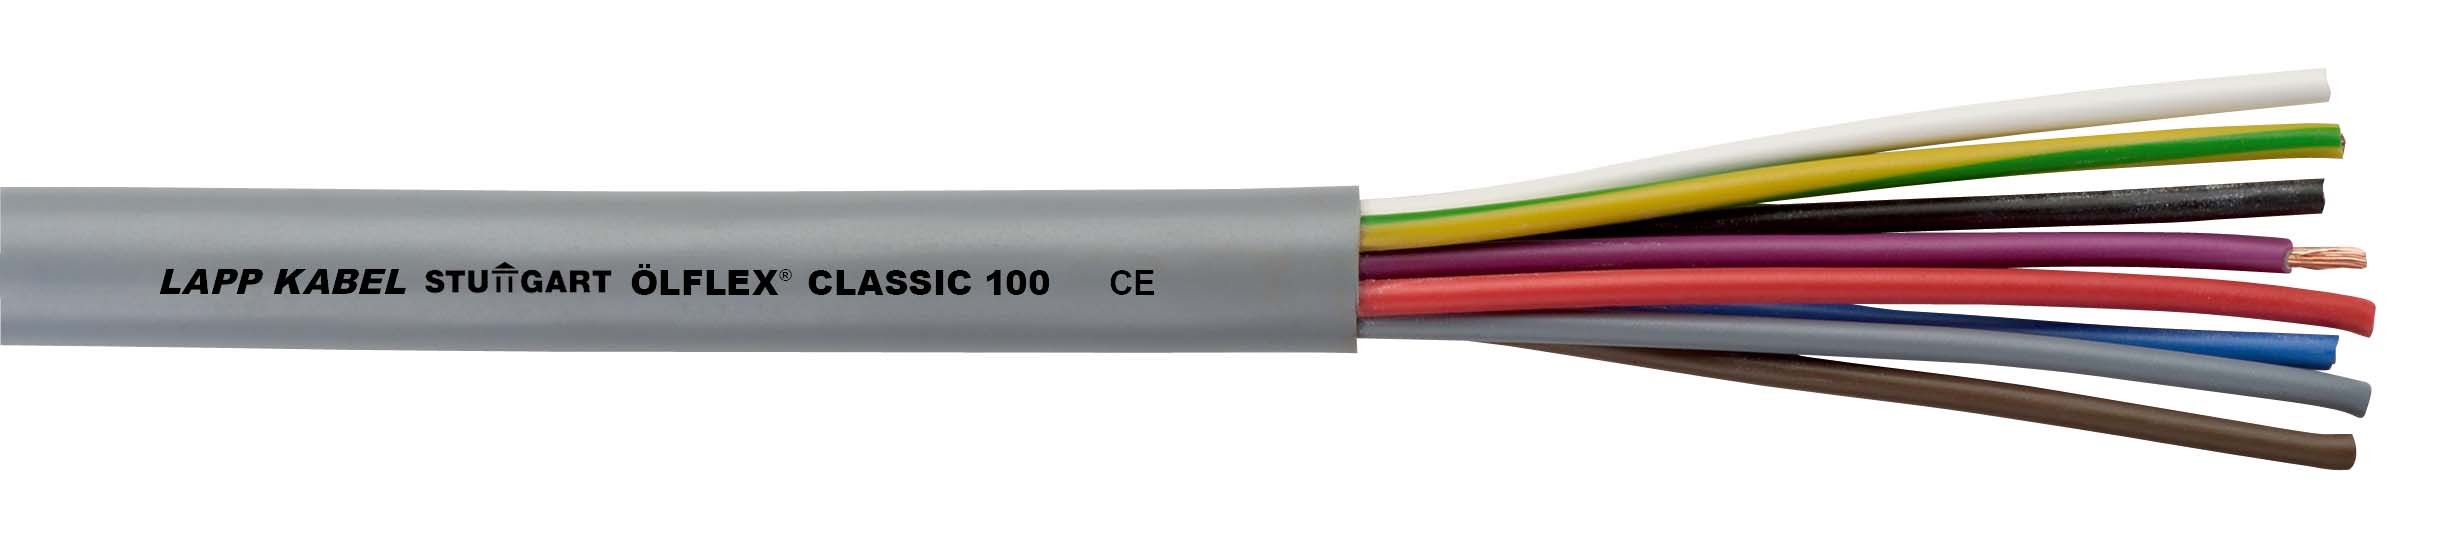 ÖLFLEX CLASSIC 100 3G1,5 00100644 T500 